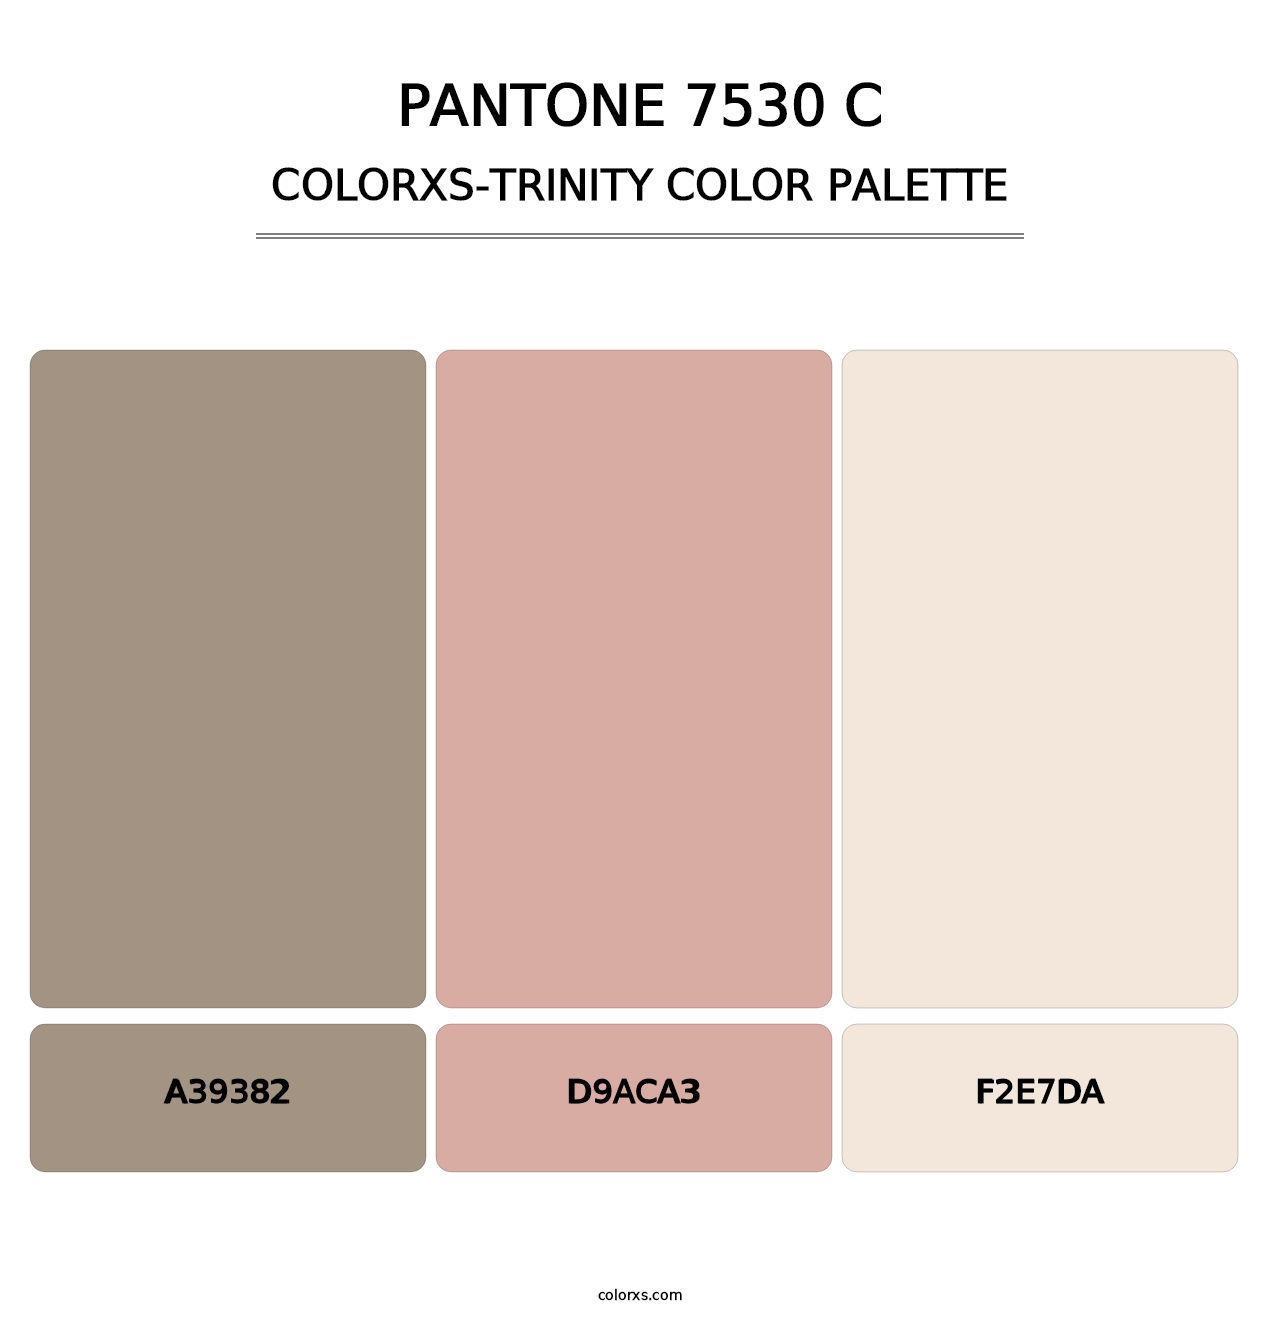 PANTONE 7530 C - Colorxs Trinity Palette